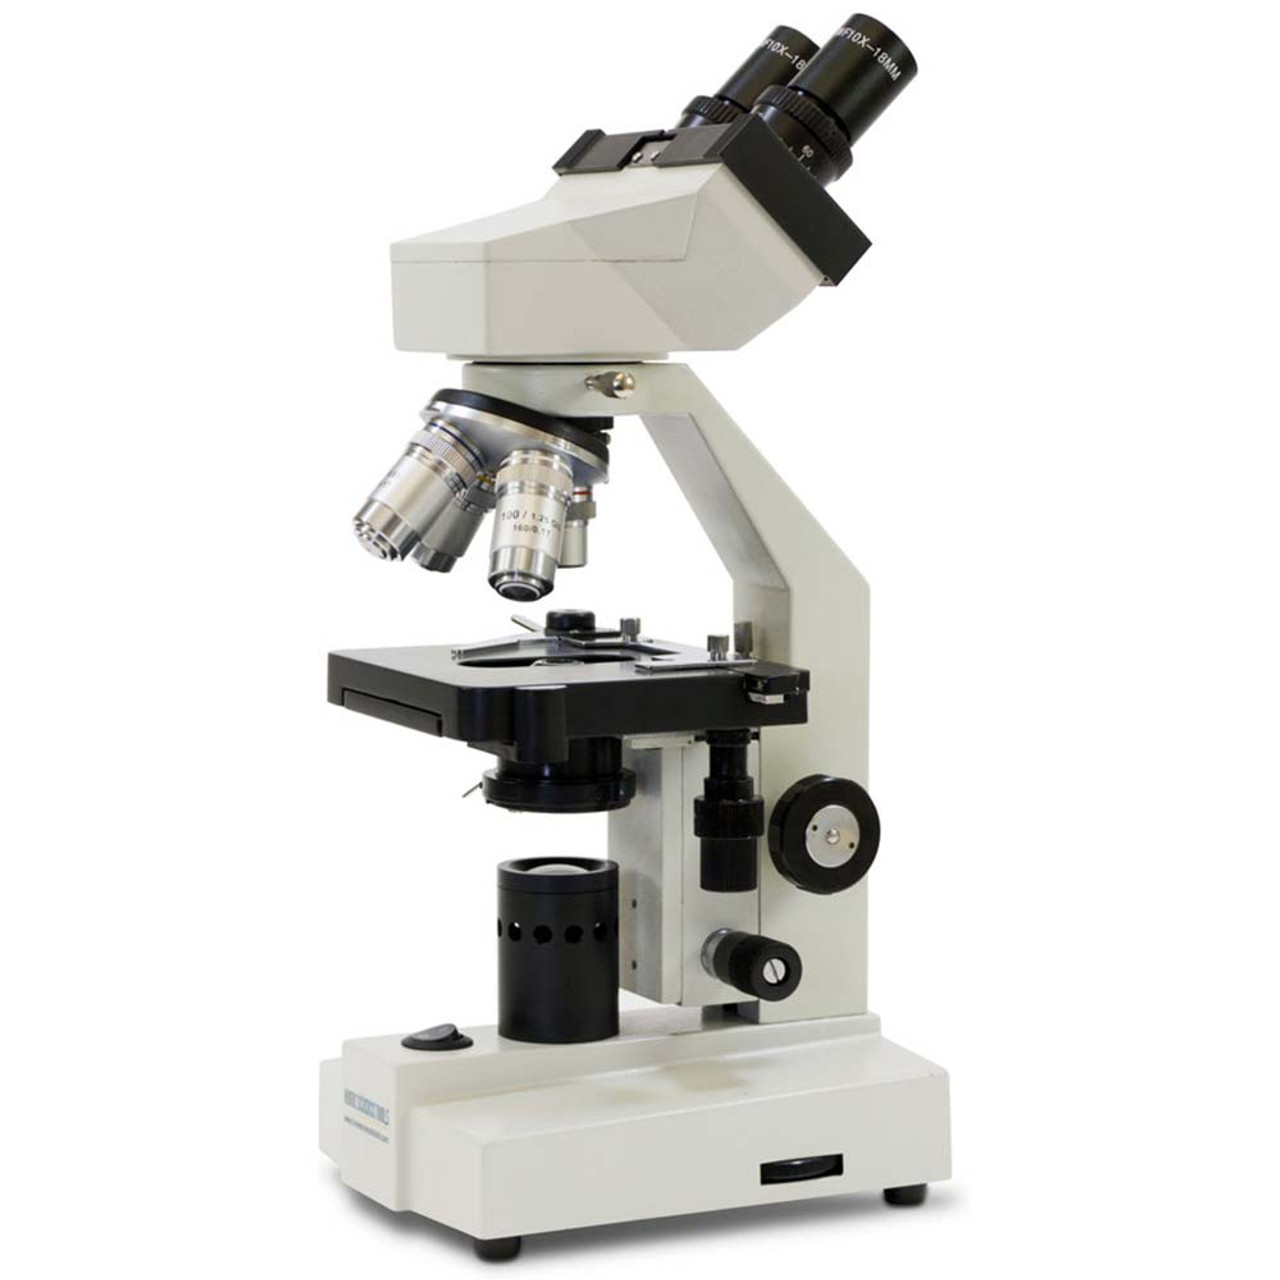 microscope gift guide - home binocular microscope